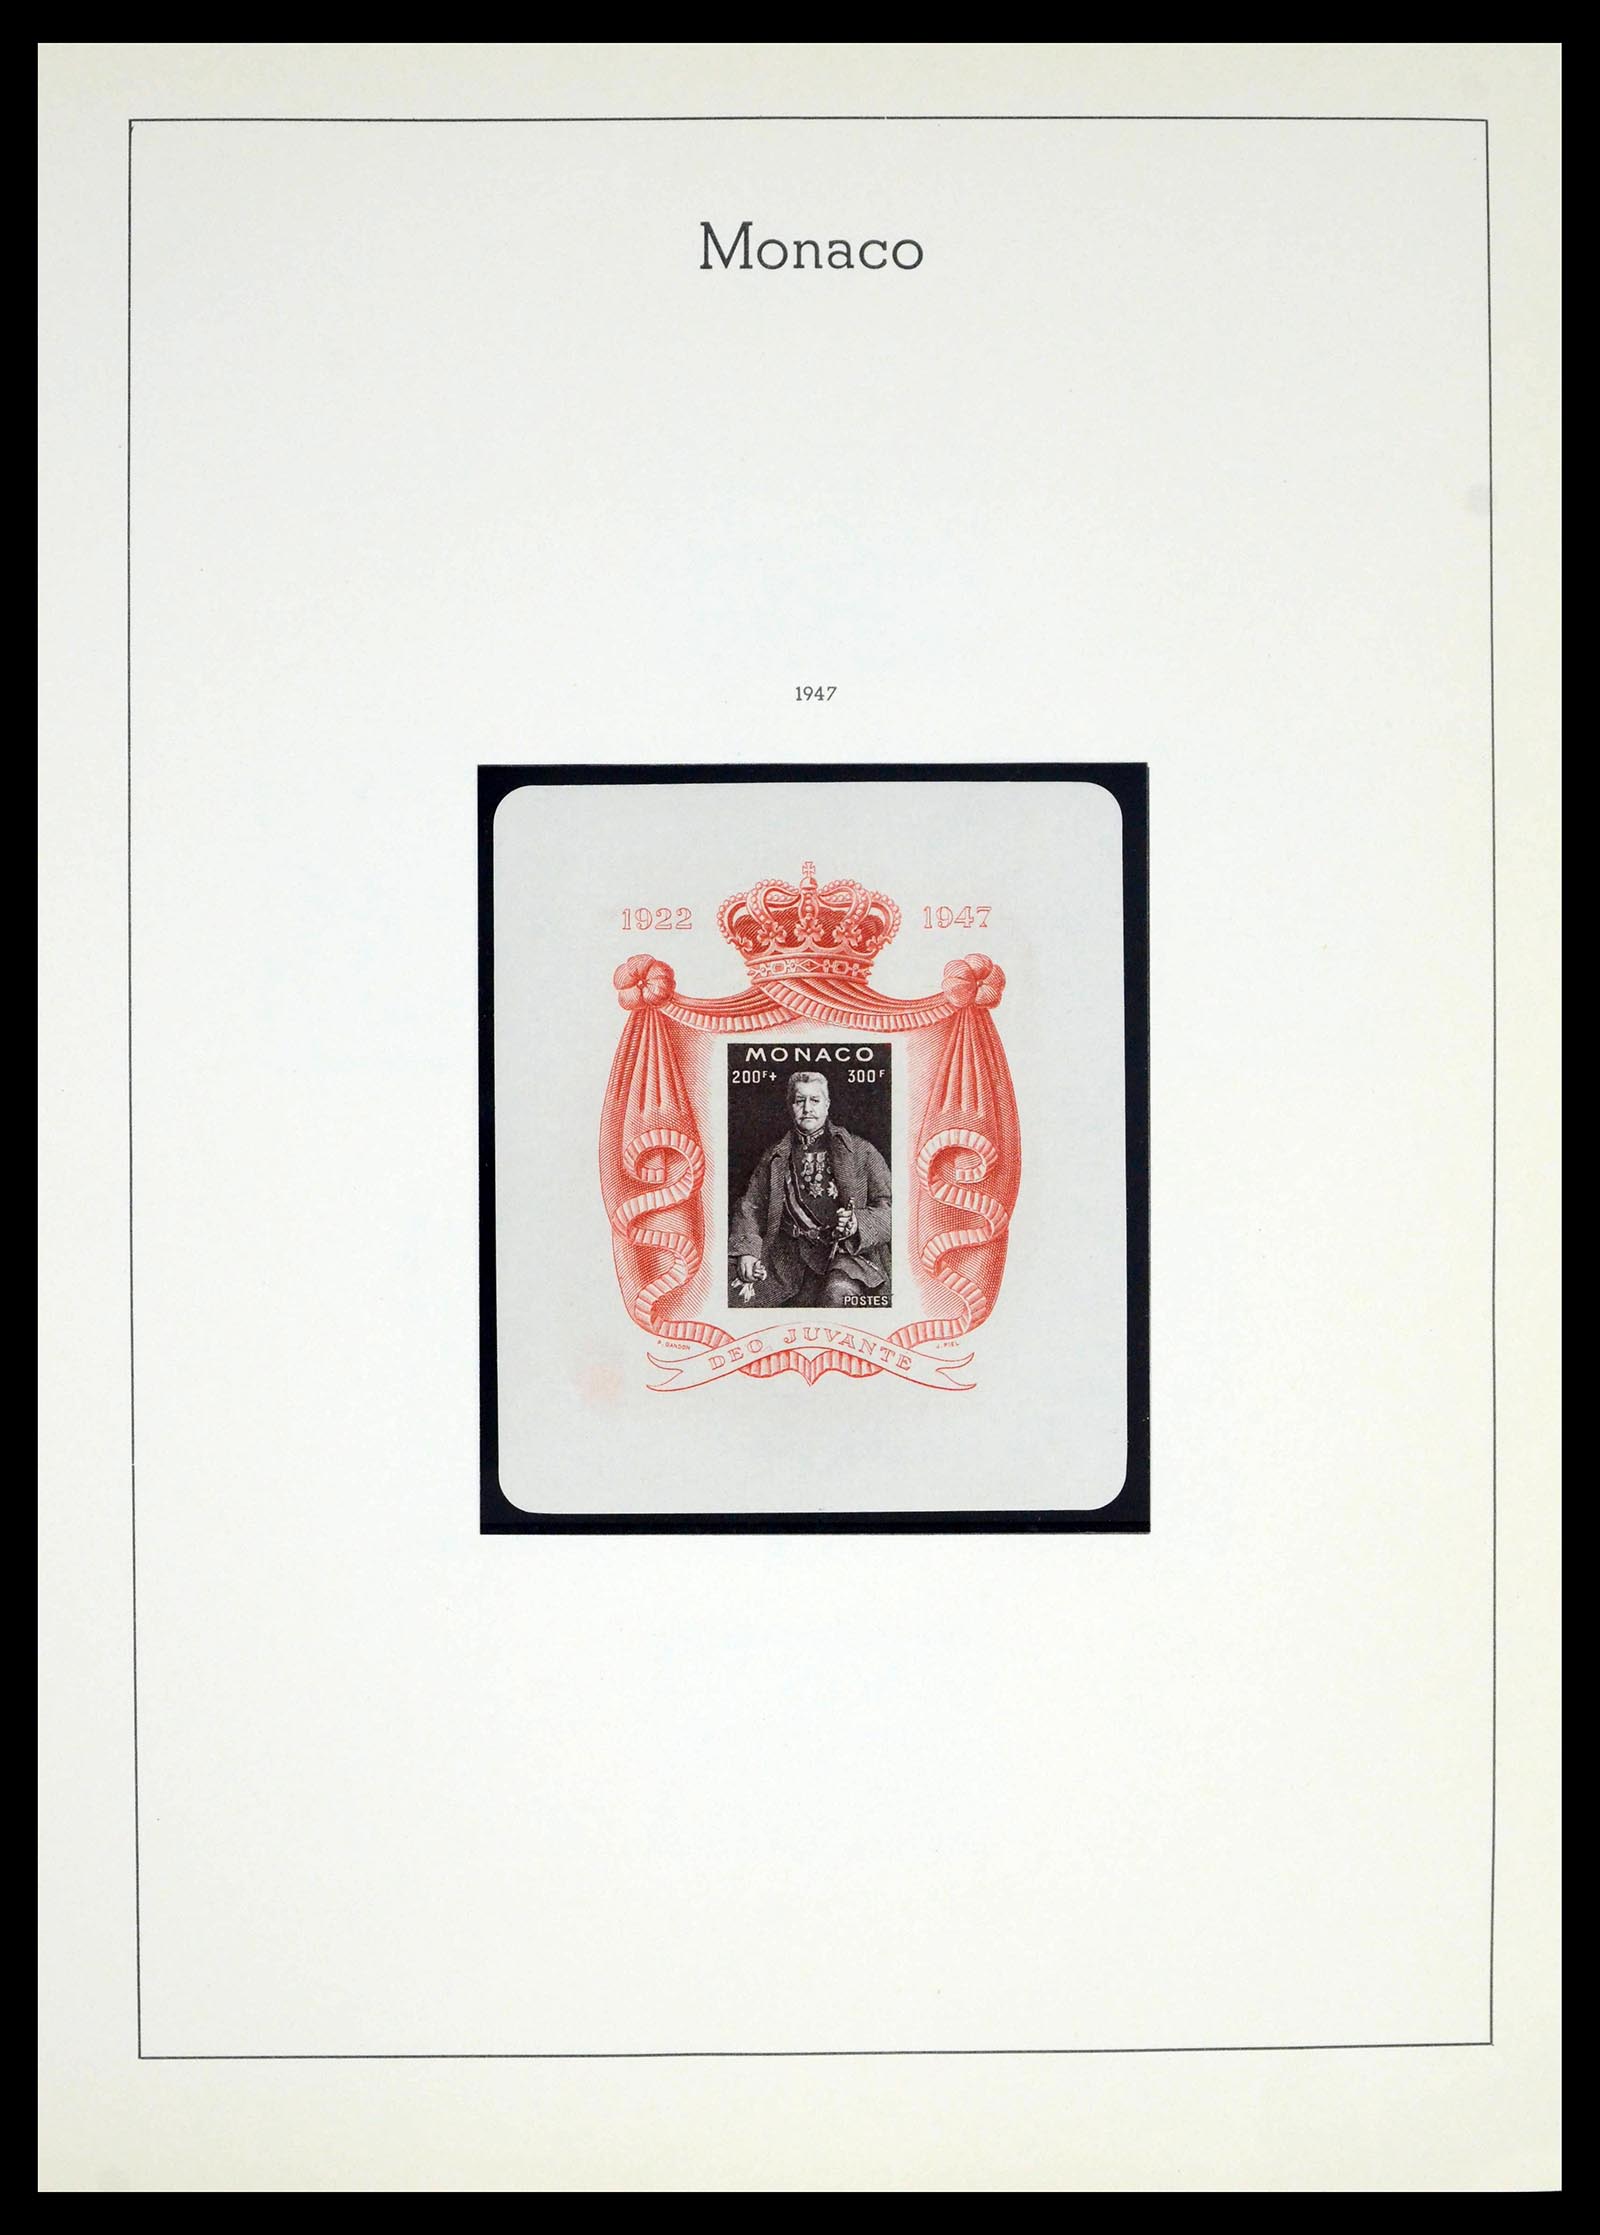 39392 0028 - Stamp collection 39392 Monaco 1885-1999.